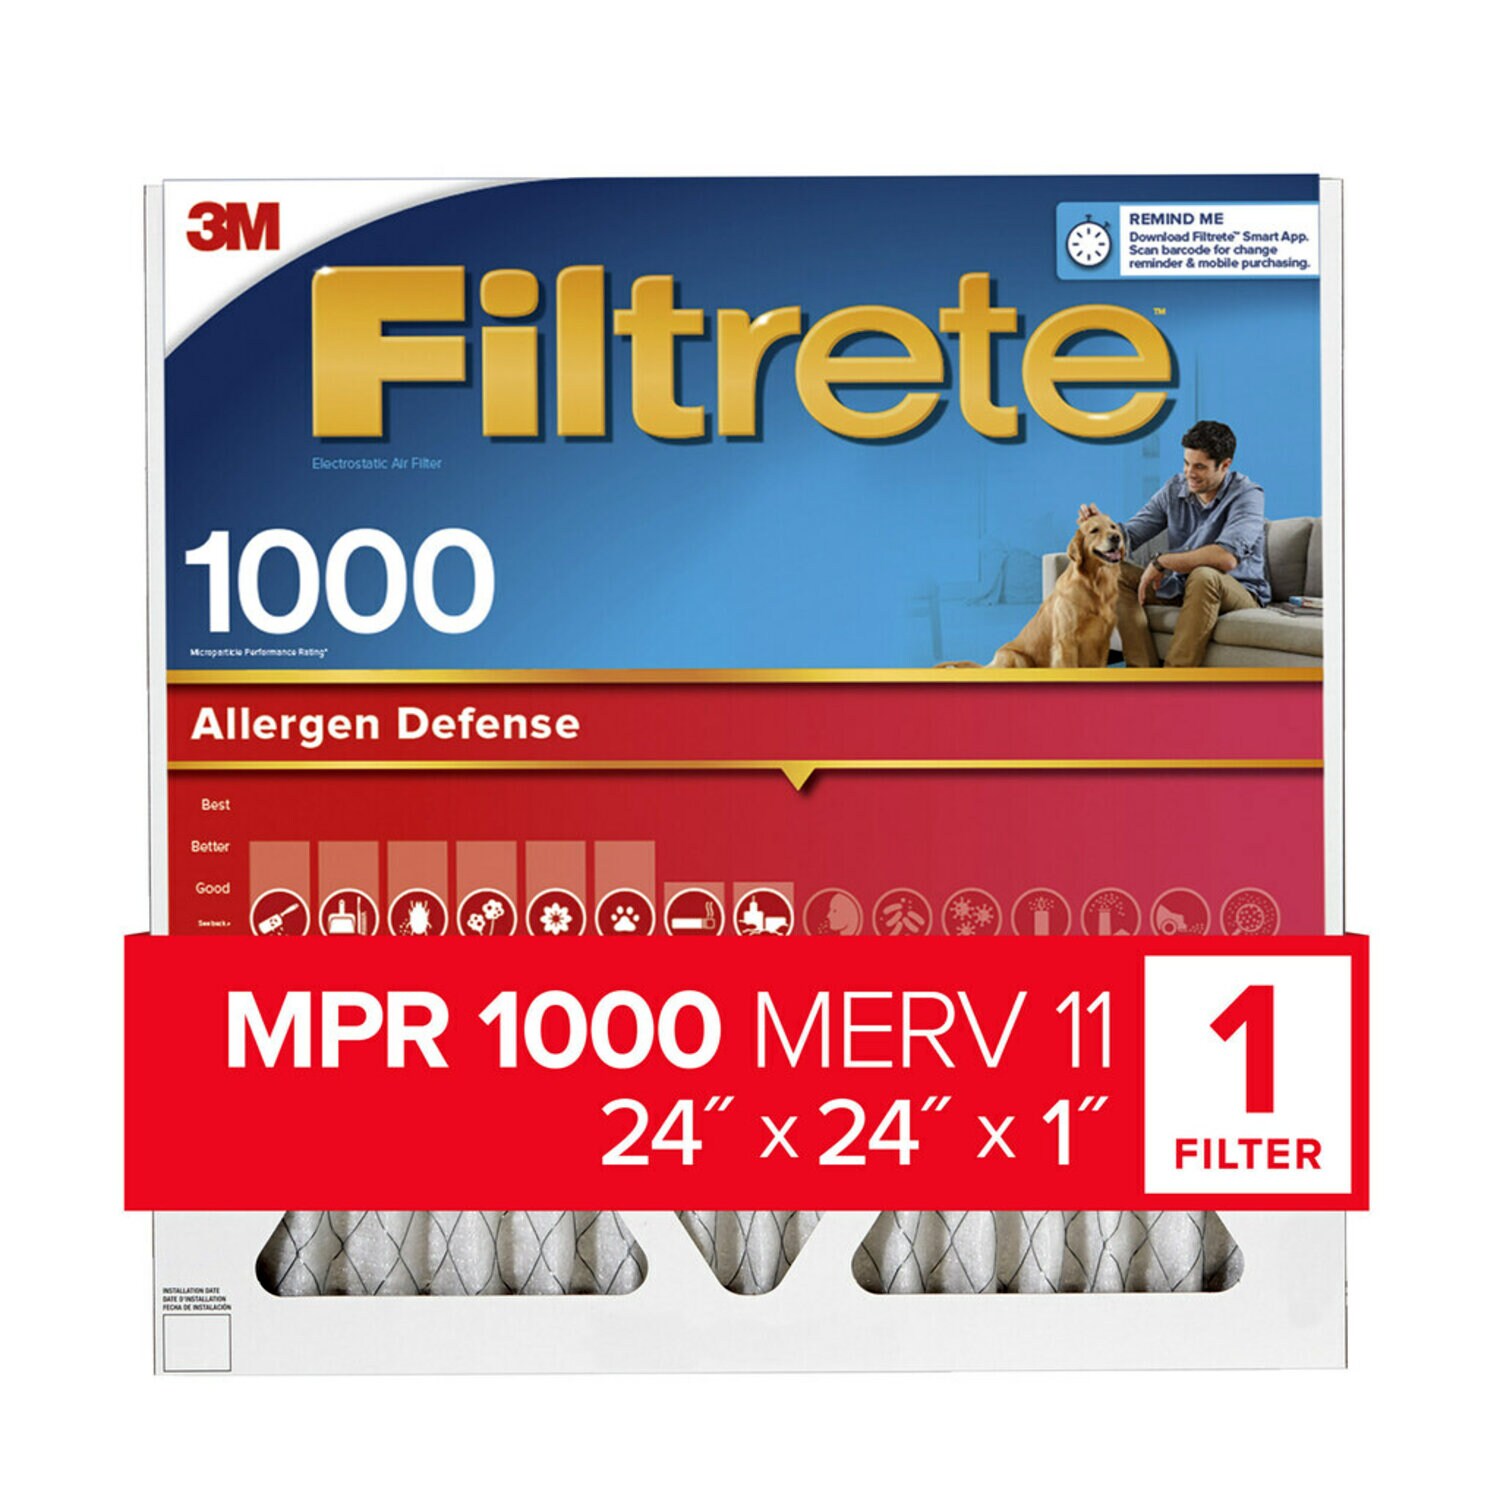 7100192461 - Filtrete Allergen Defense Air Filter, 1000 MPR, AL12-4, 24 in x 24 in x
1 in (60,9 cm x 60,9 cm x 2,5 cm)